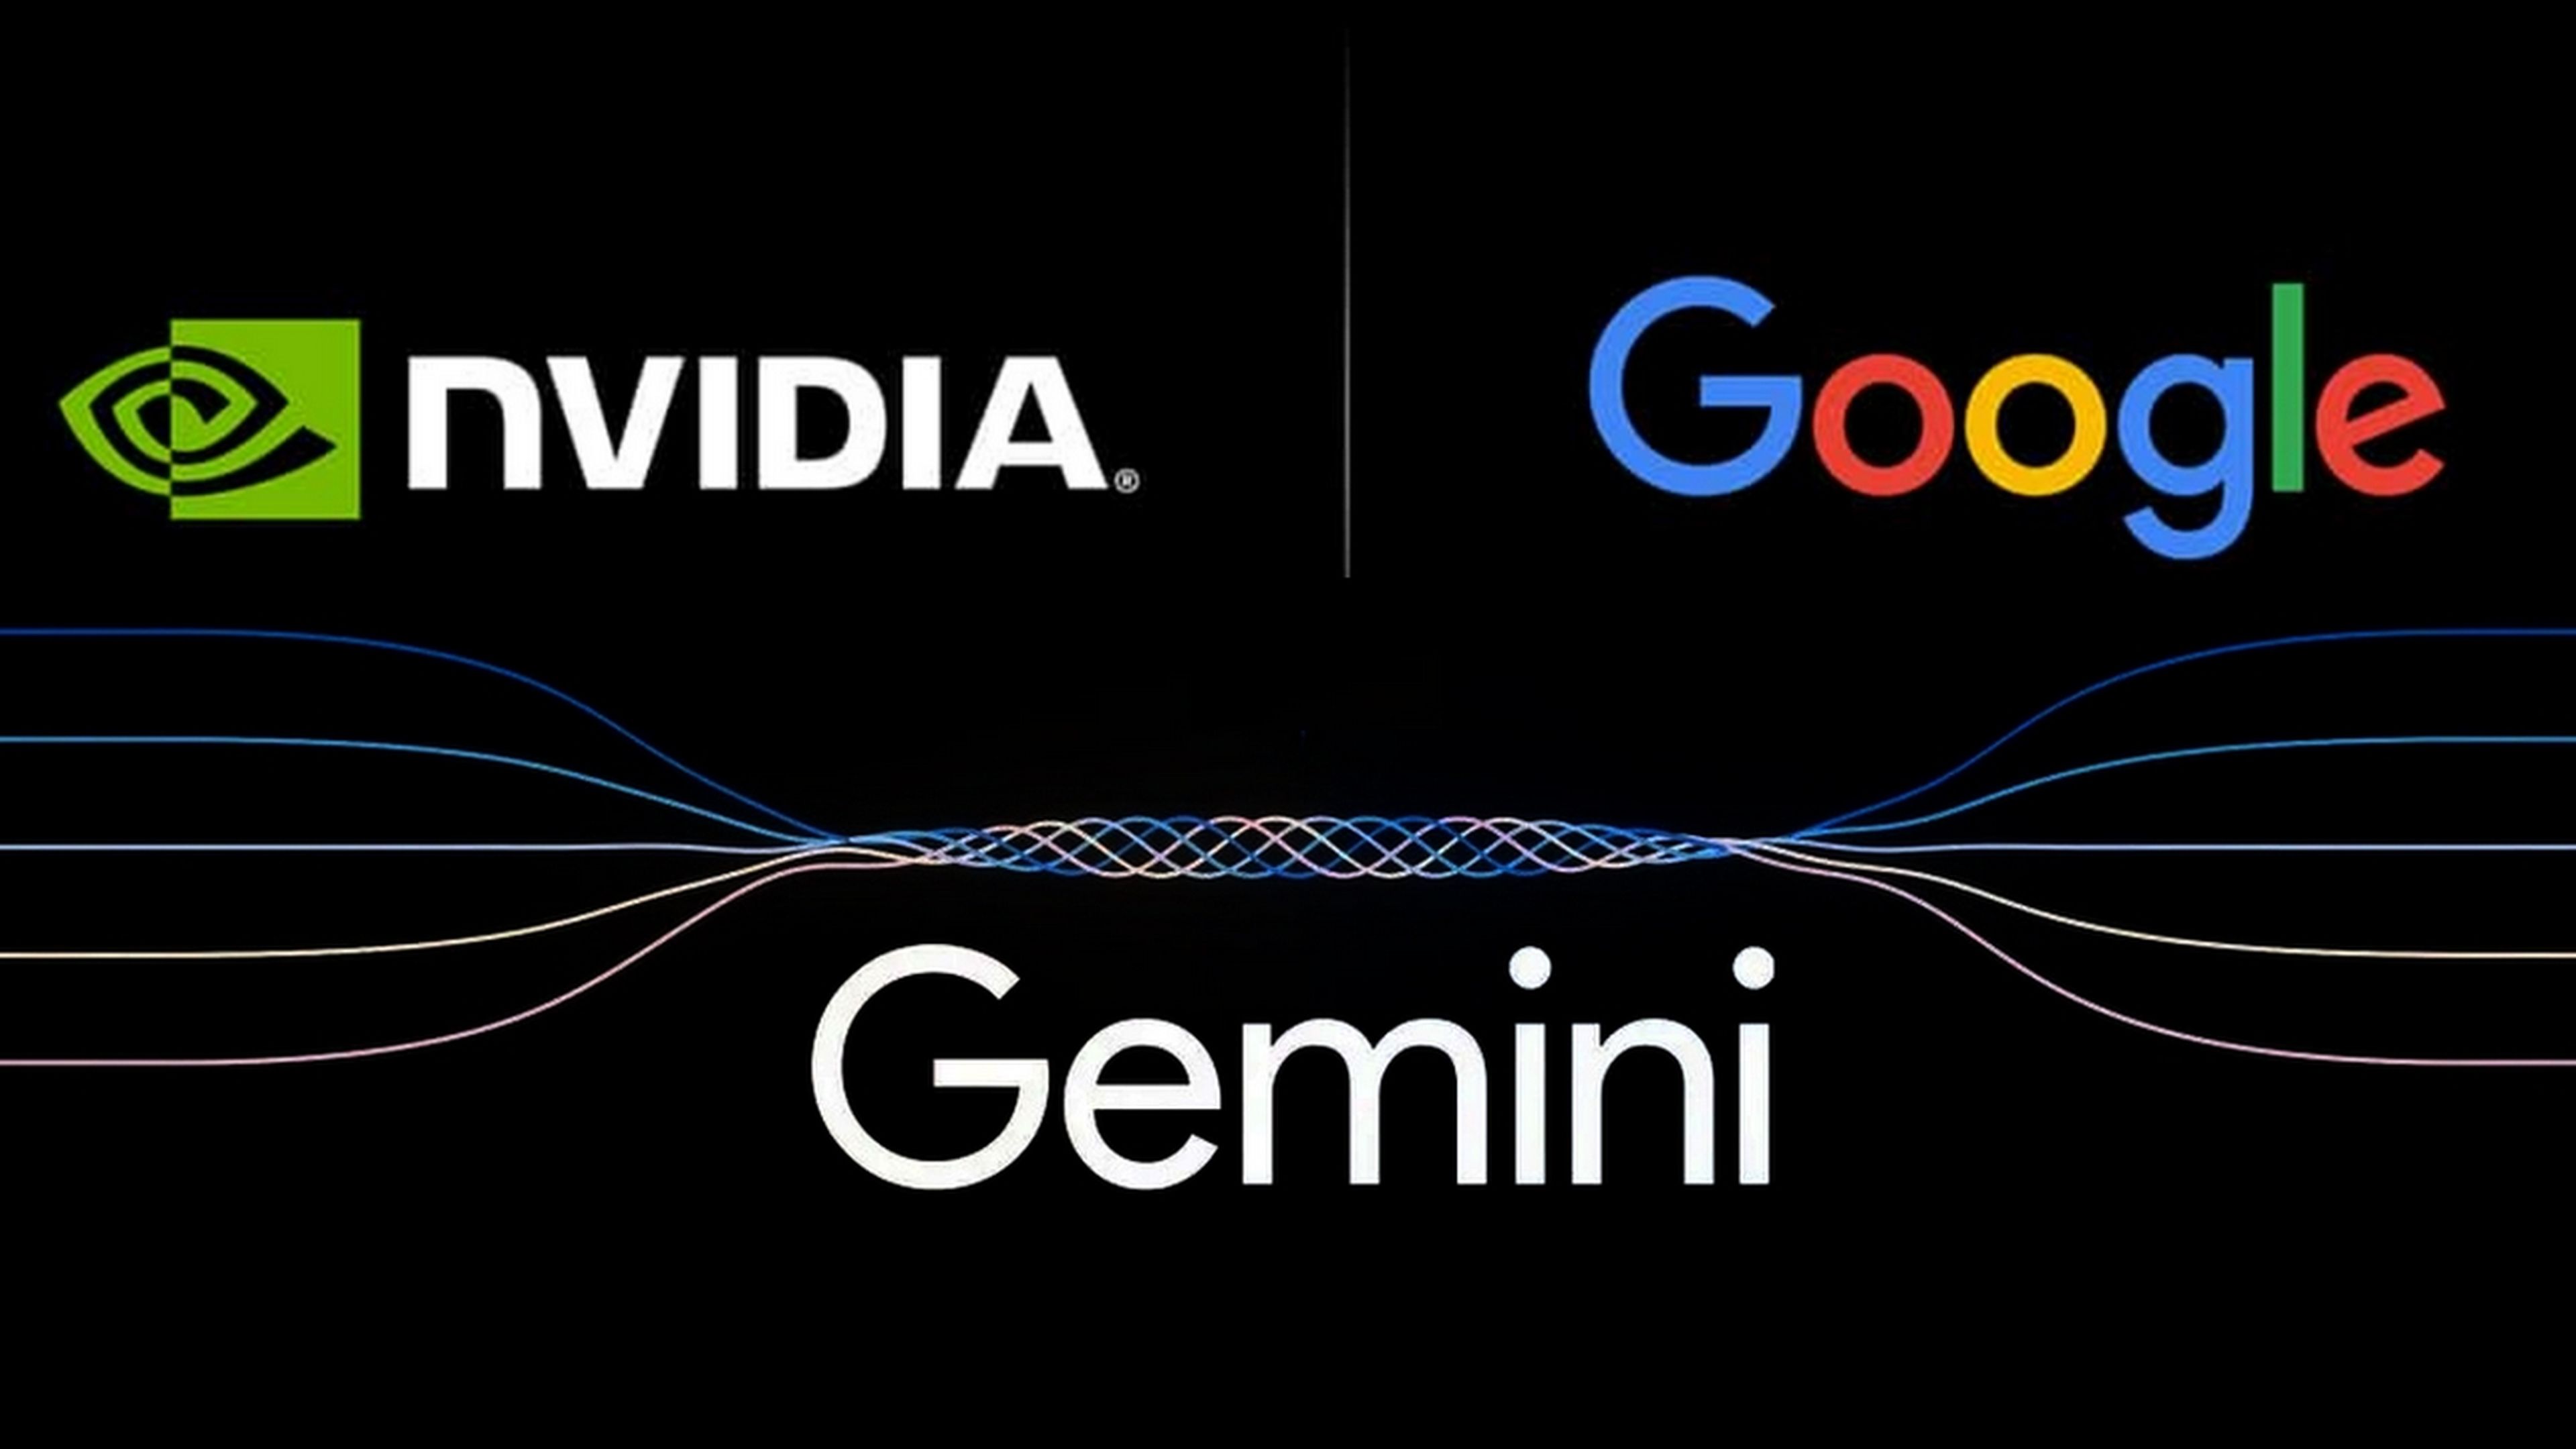 Google y NVIDIA se alían: Gemini Gemma va a ser tu IA favorita si tienes una tarjeta RTX